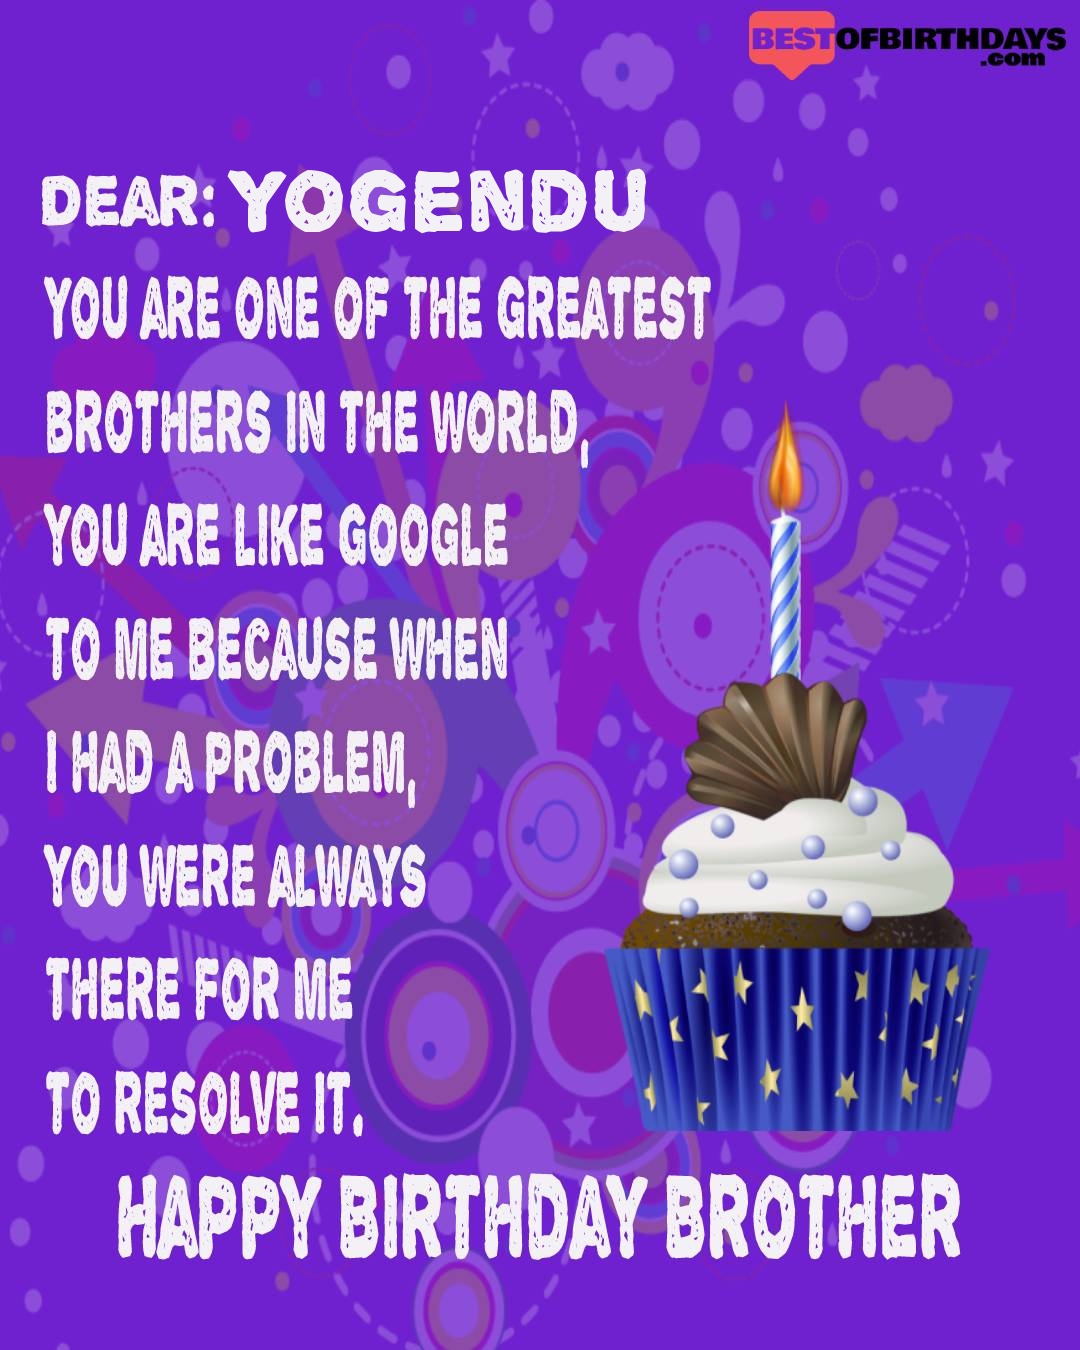 Happy birthday yogendu bhai brother bro